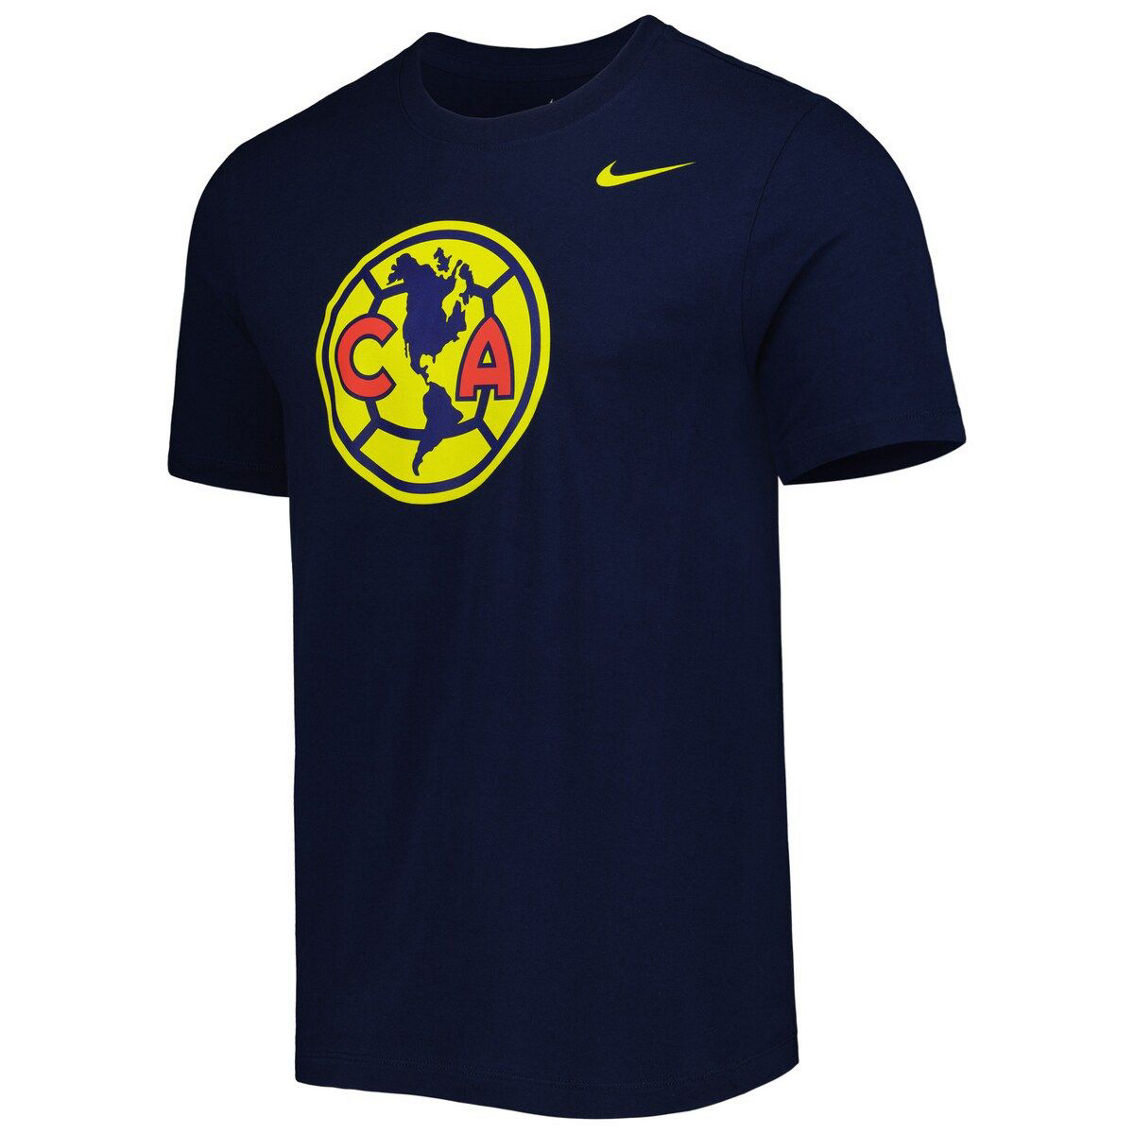 Nike Men's Navy Club America Core T-Shirt - Image 3 of 4